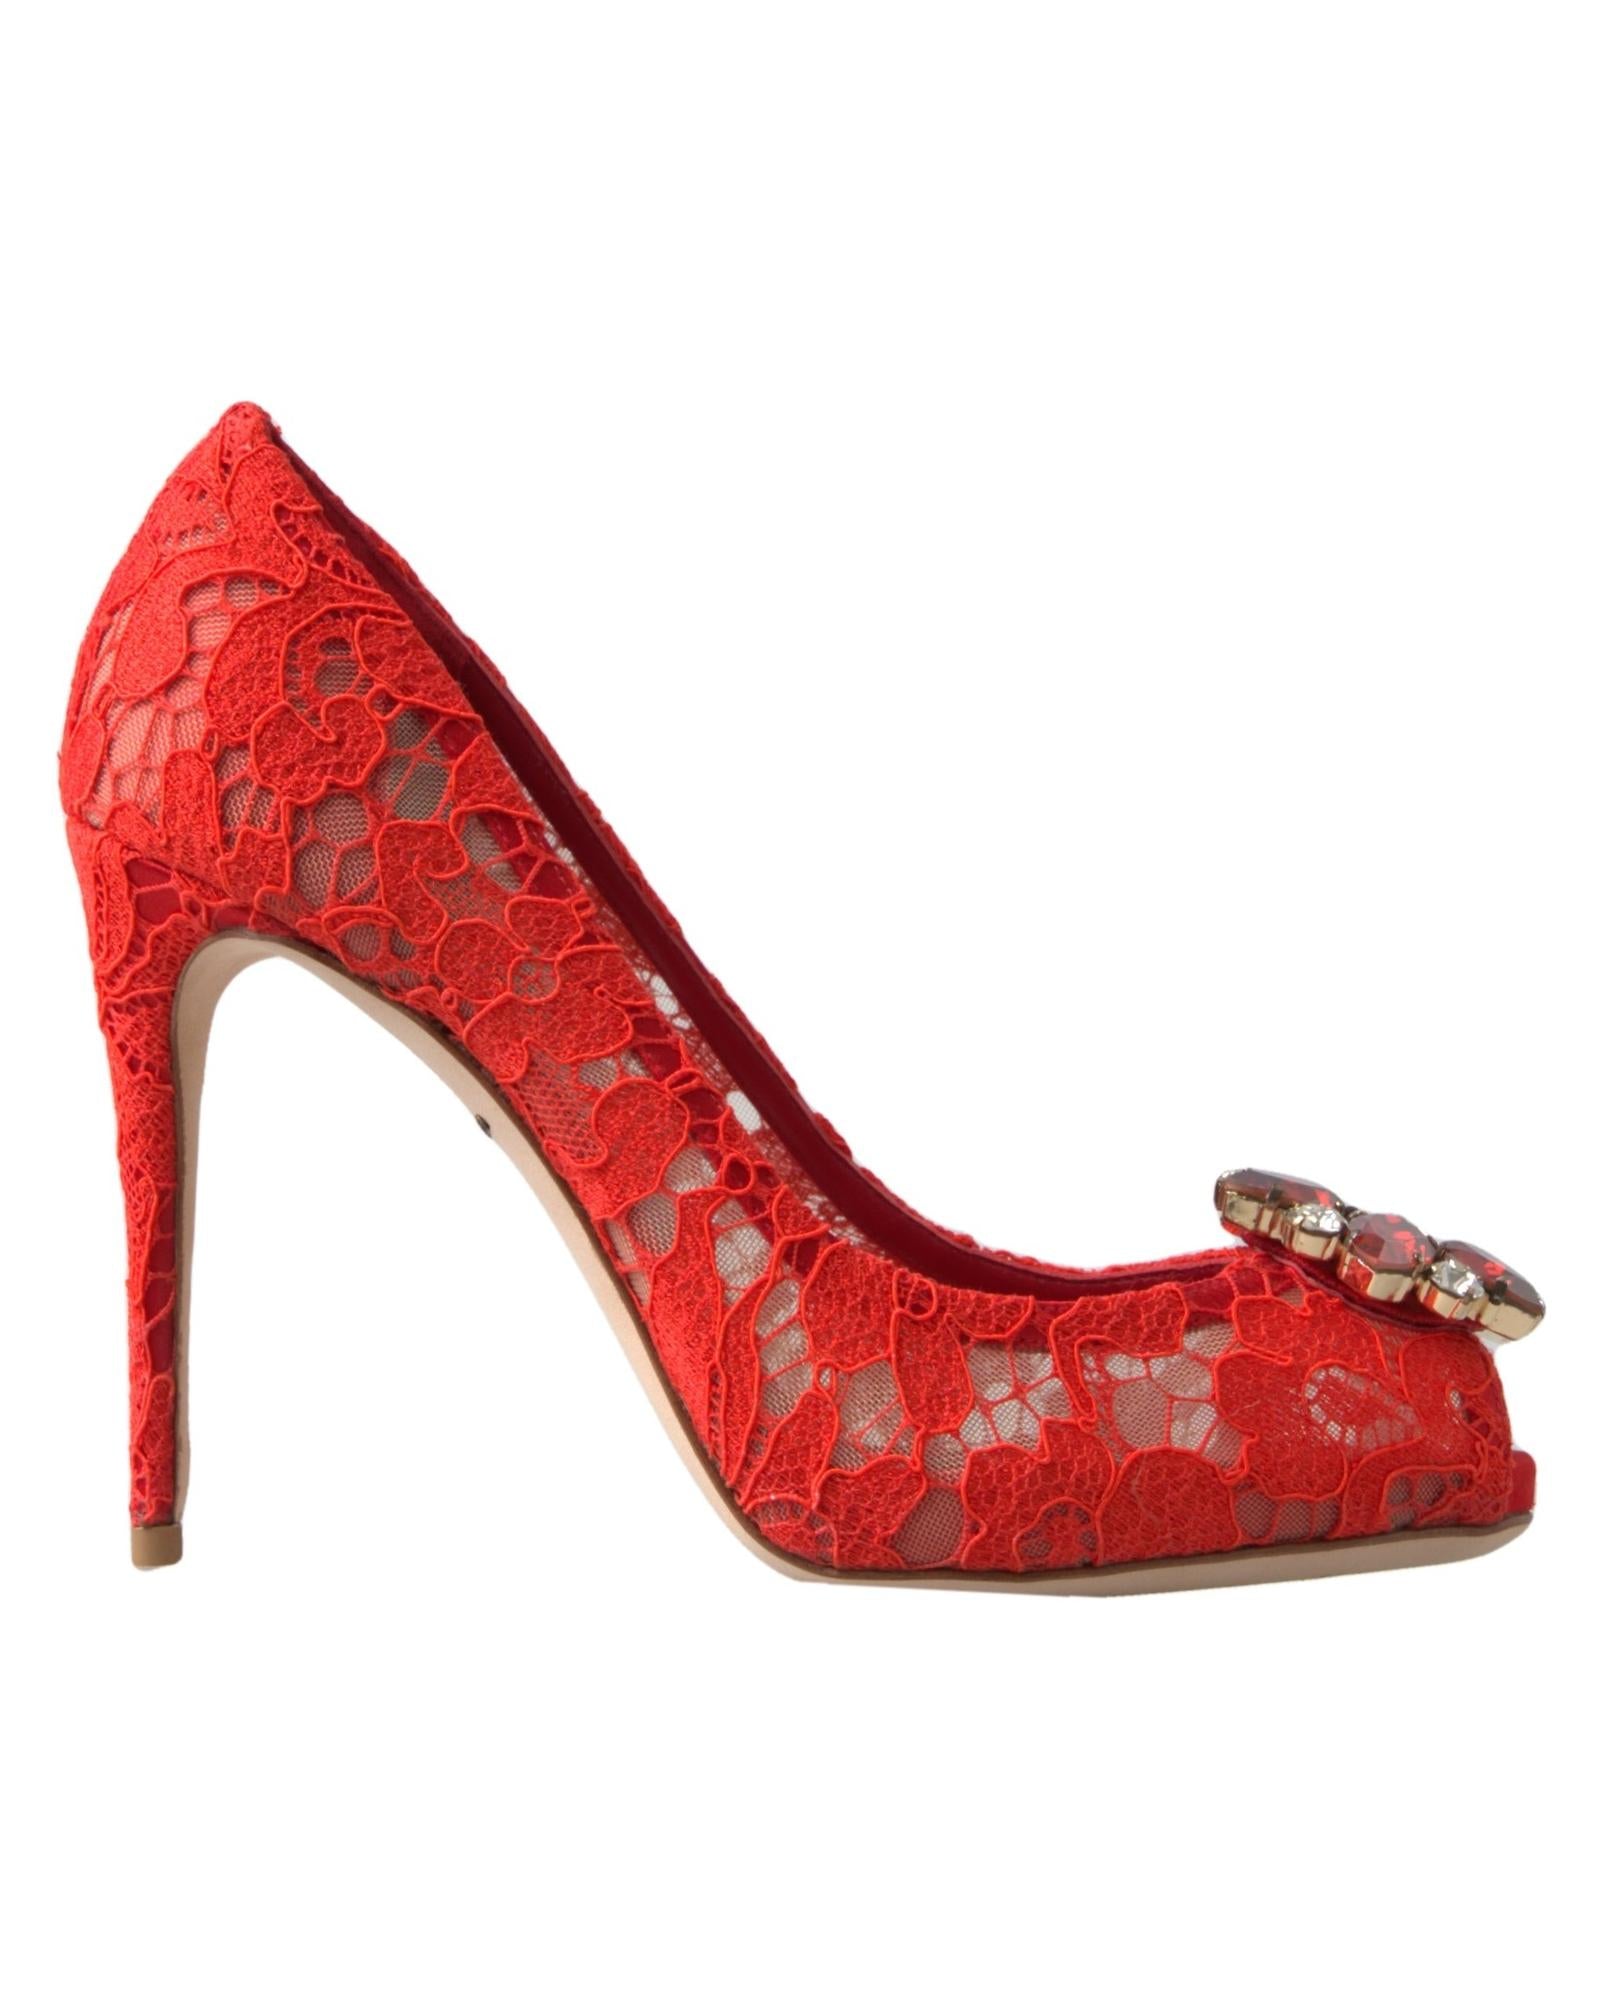 Dolce & Gabbana Women's Red Taormina Lace Crystal Heels Pumps Shoes - 38 EU